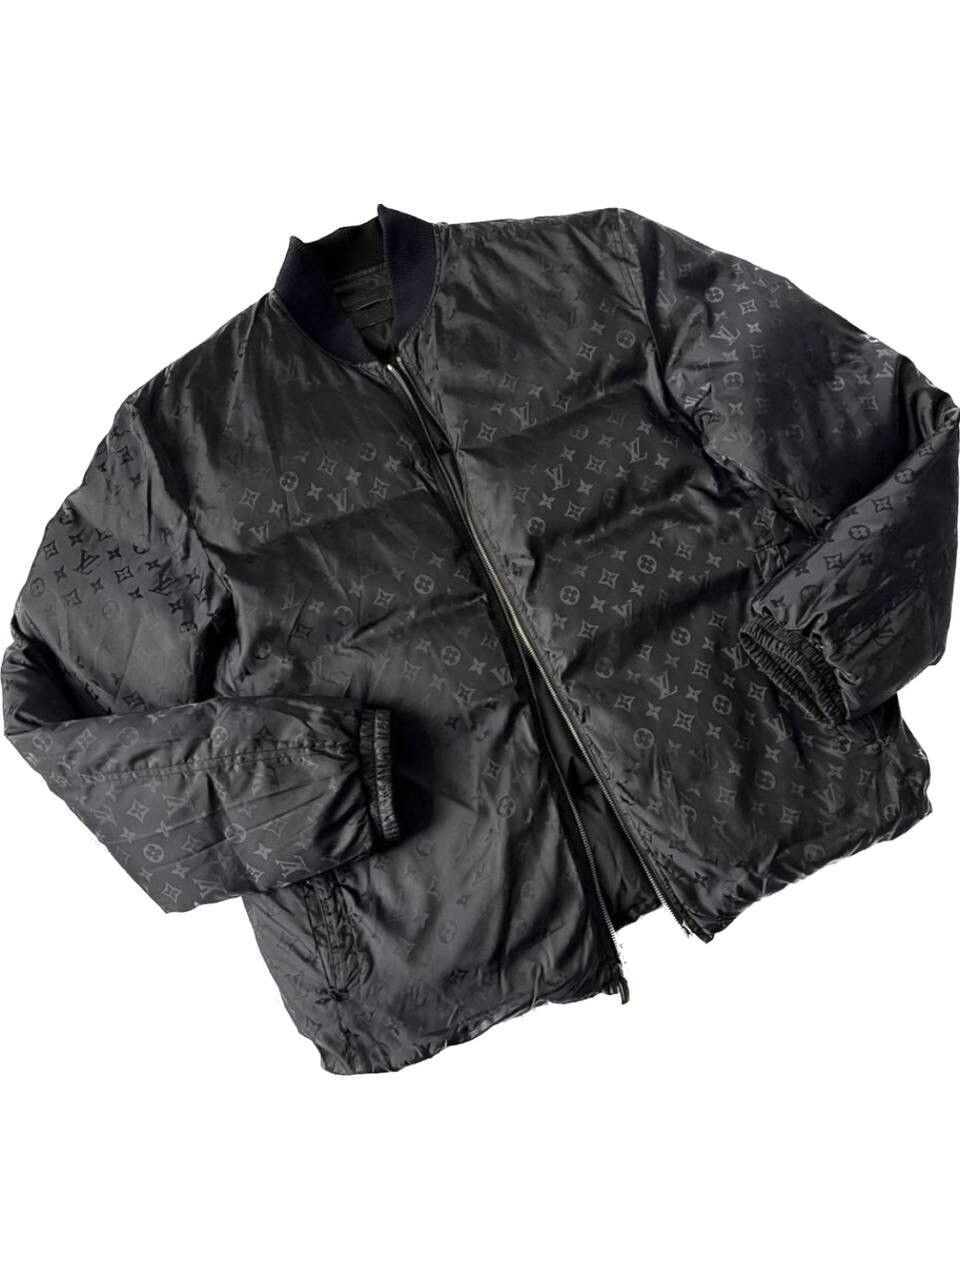 Louis Vuitton Black Leather & Nylon Reversible Bomber Jacket FR 52